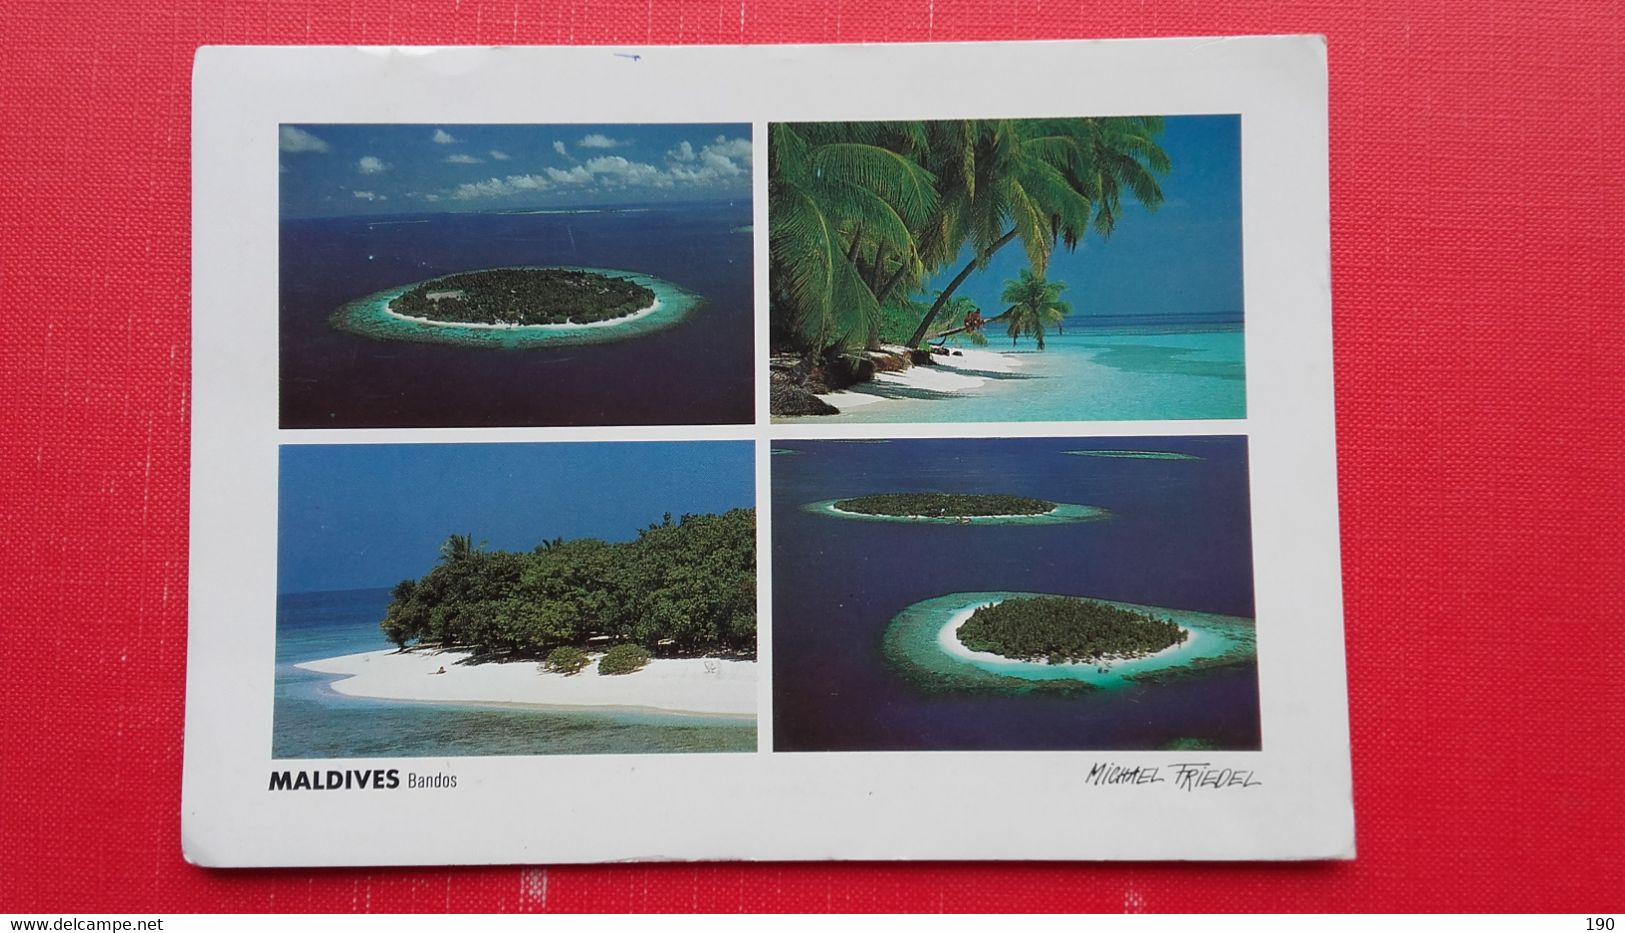 Male Atoll.Bandos - Maldive